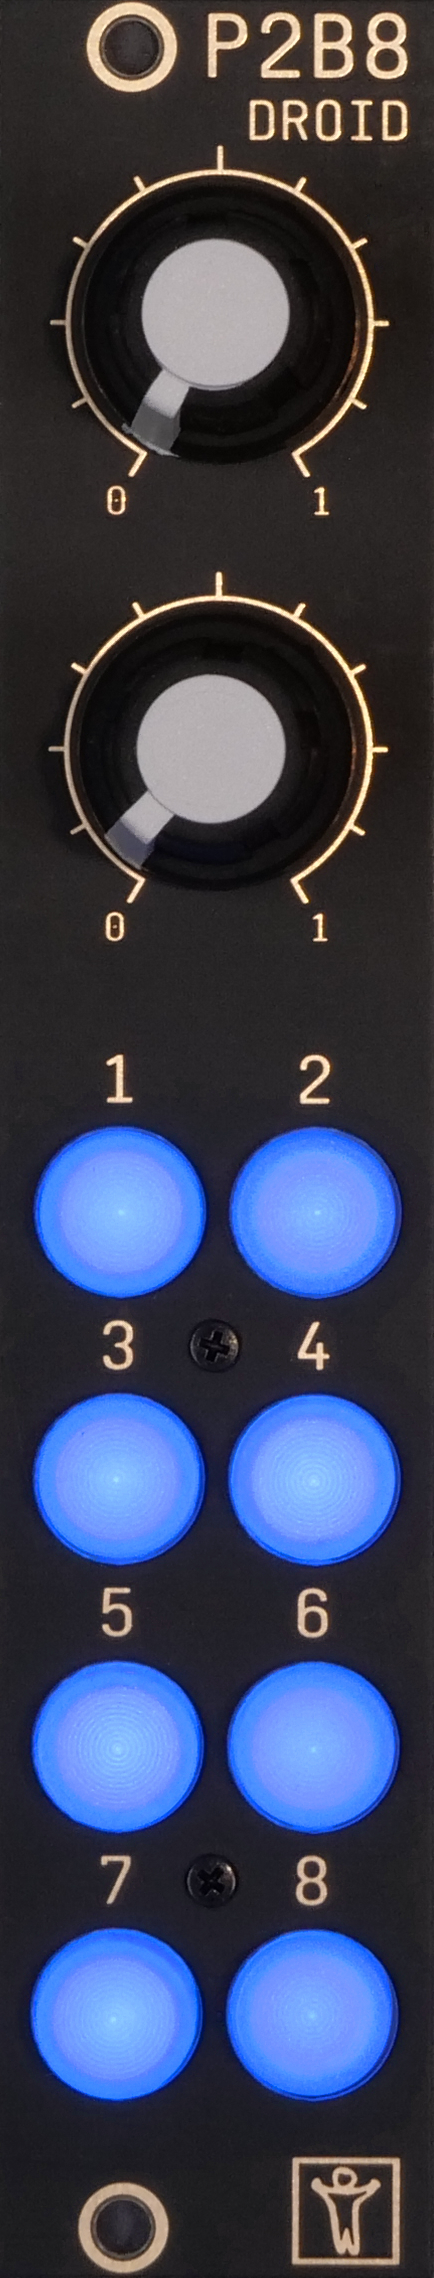 P2B8 Controller mit blauen LEDs